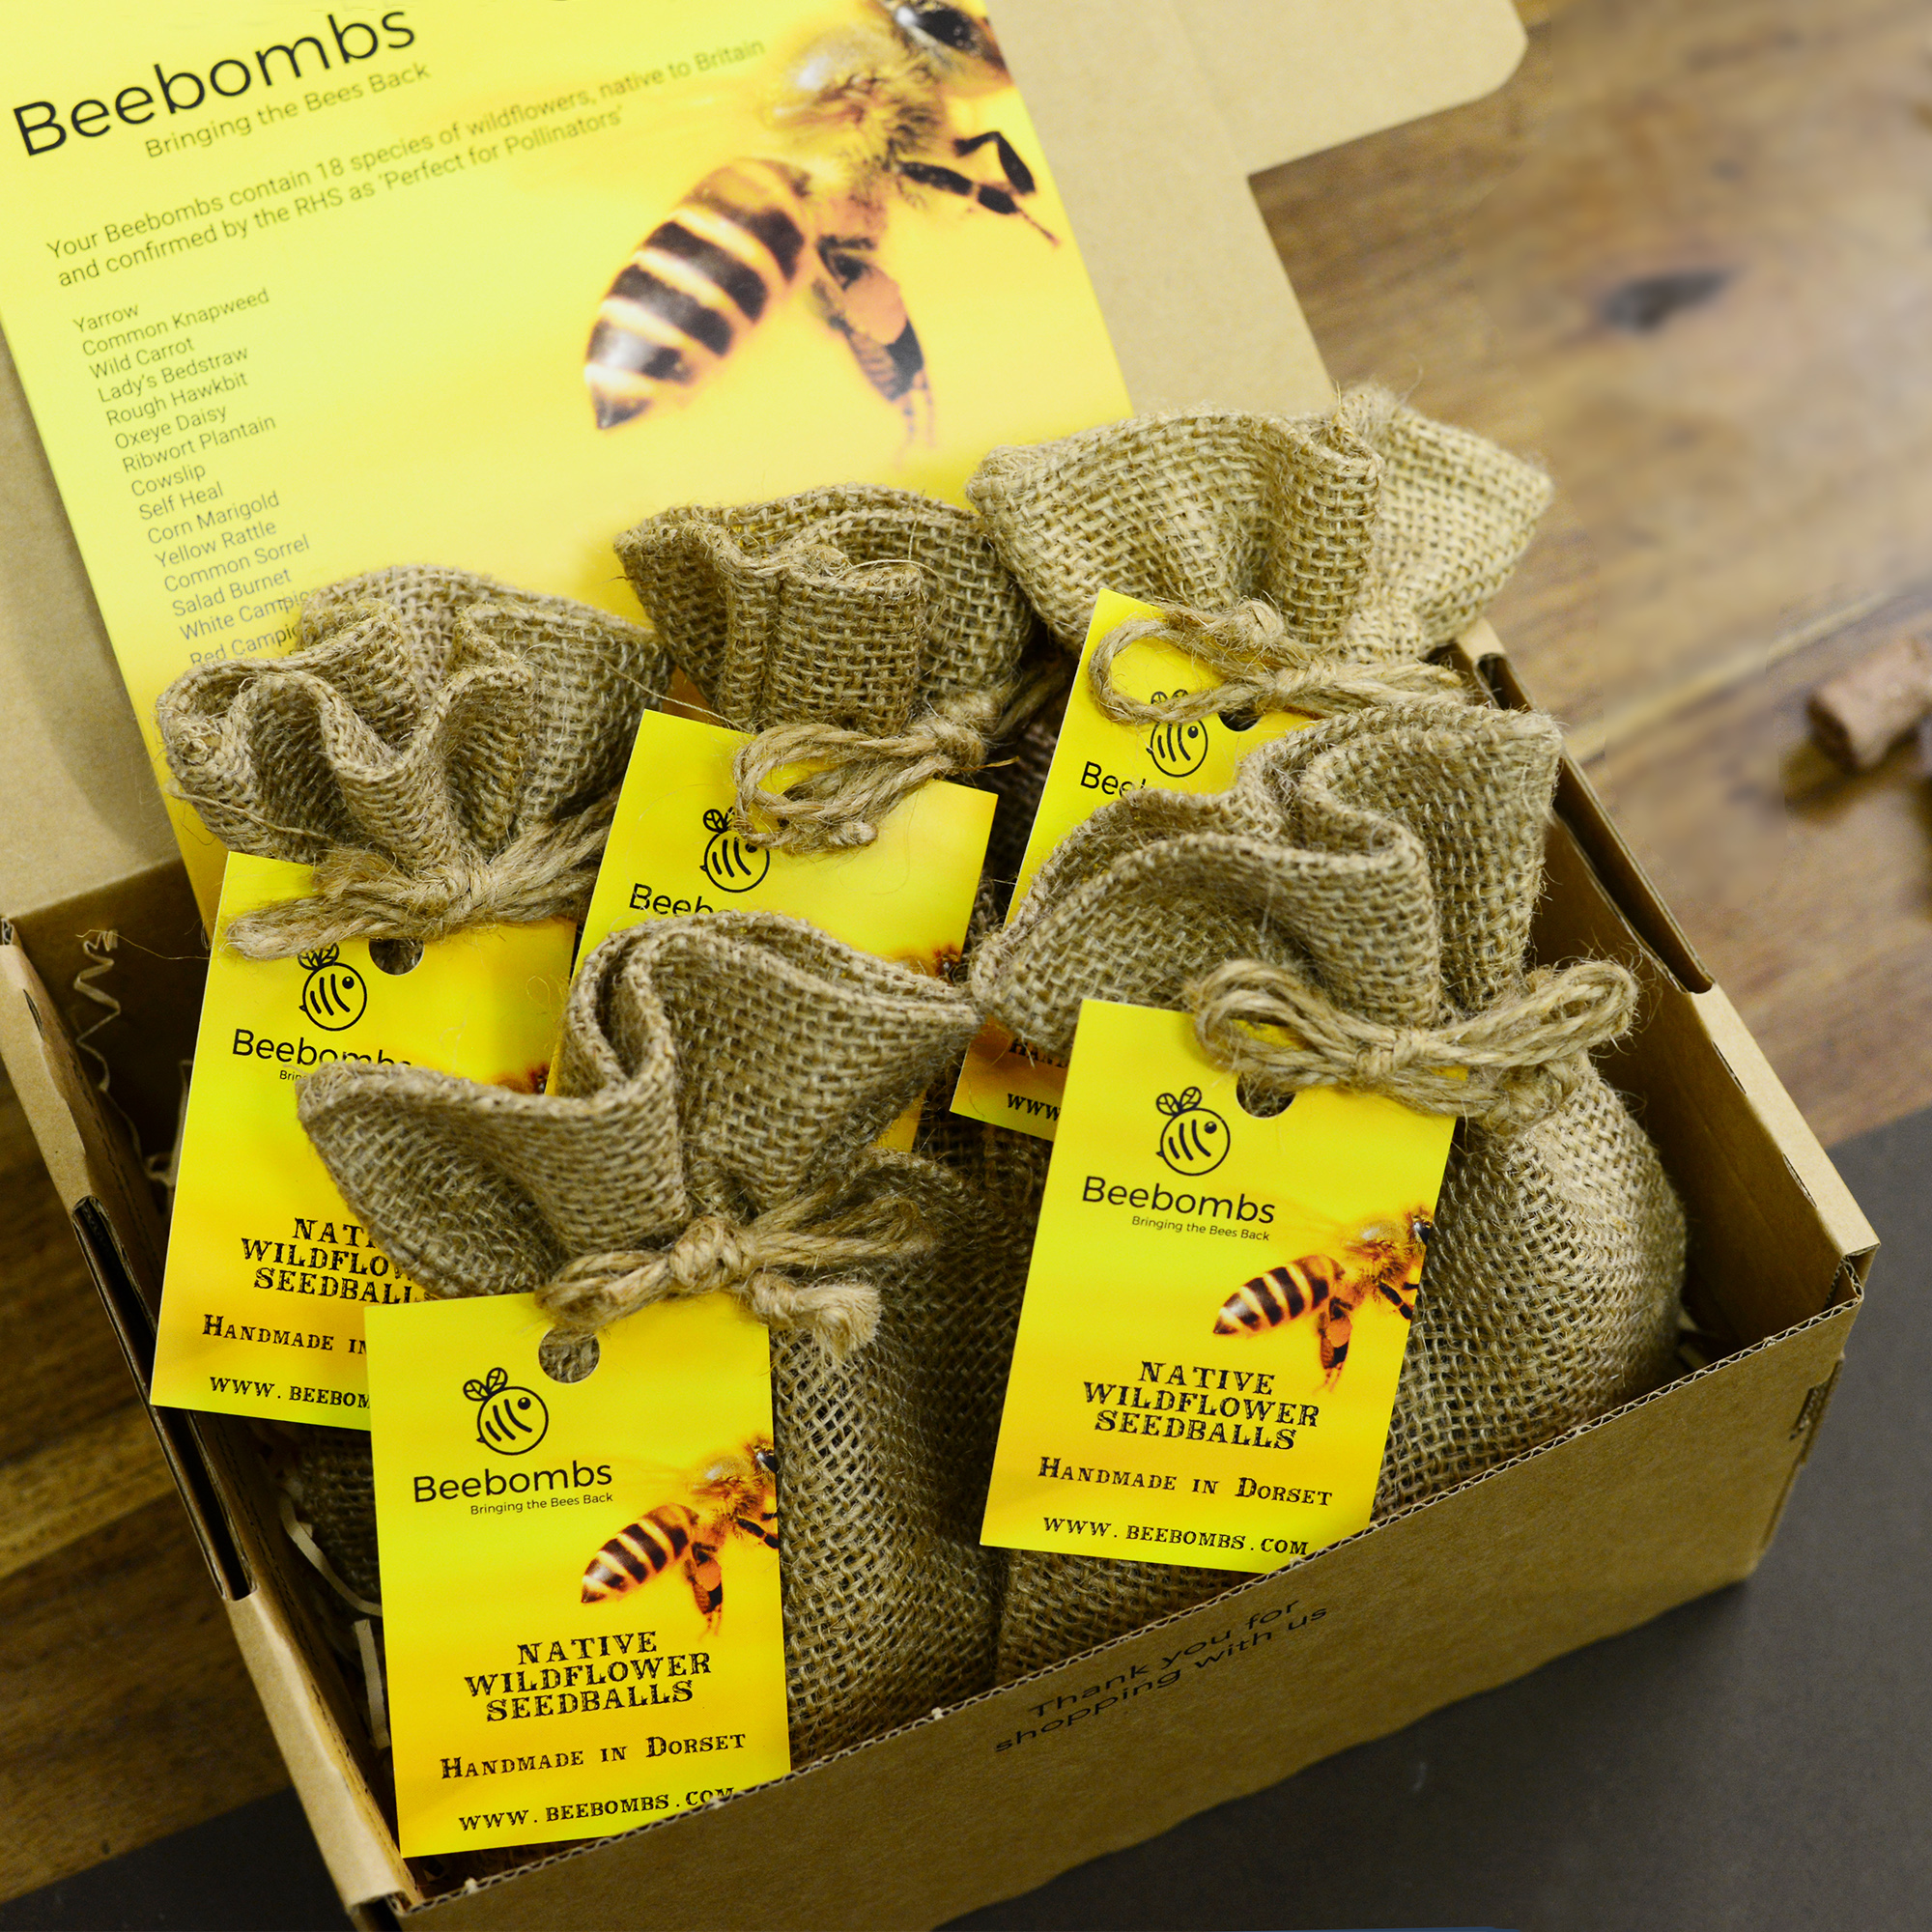 8 Bumble Bee - Yuma Crossing Gifts